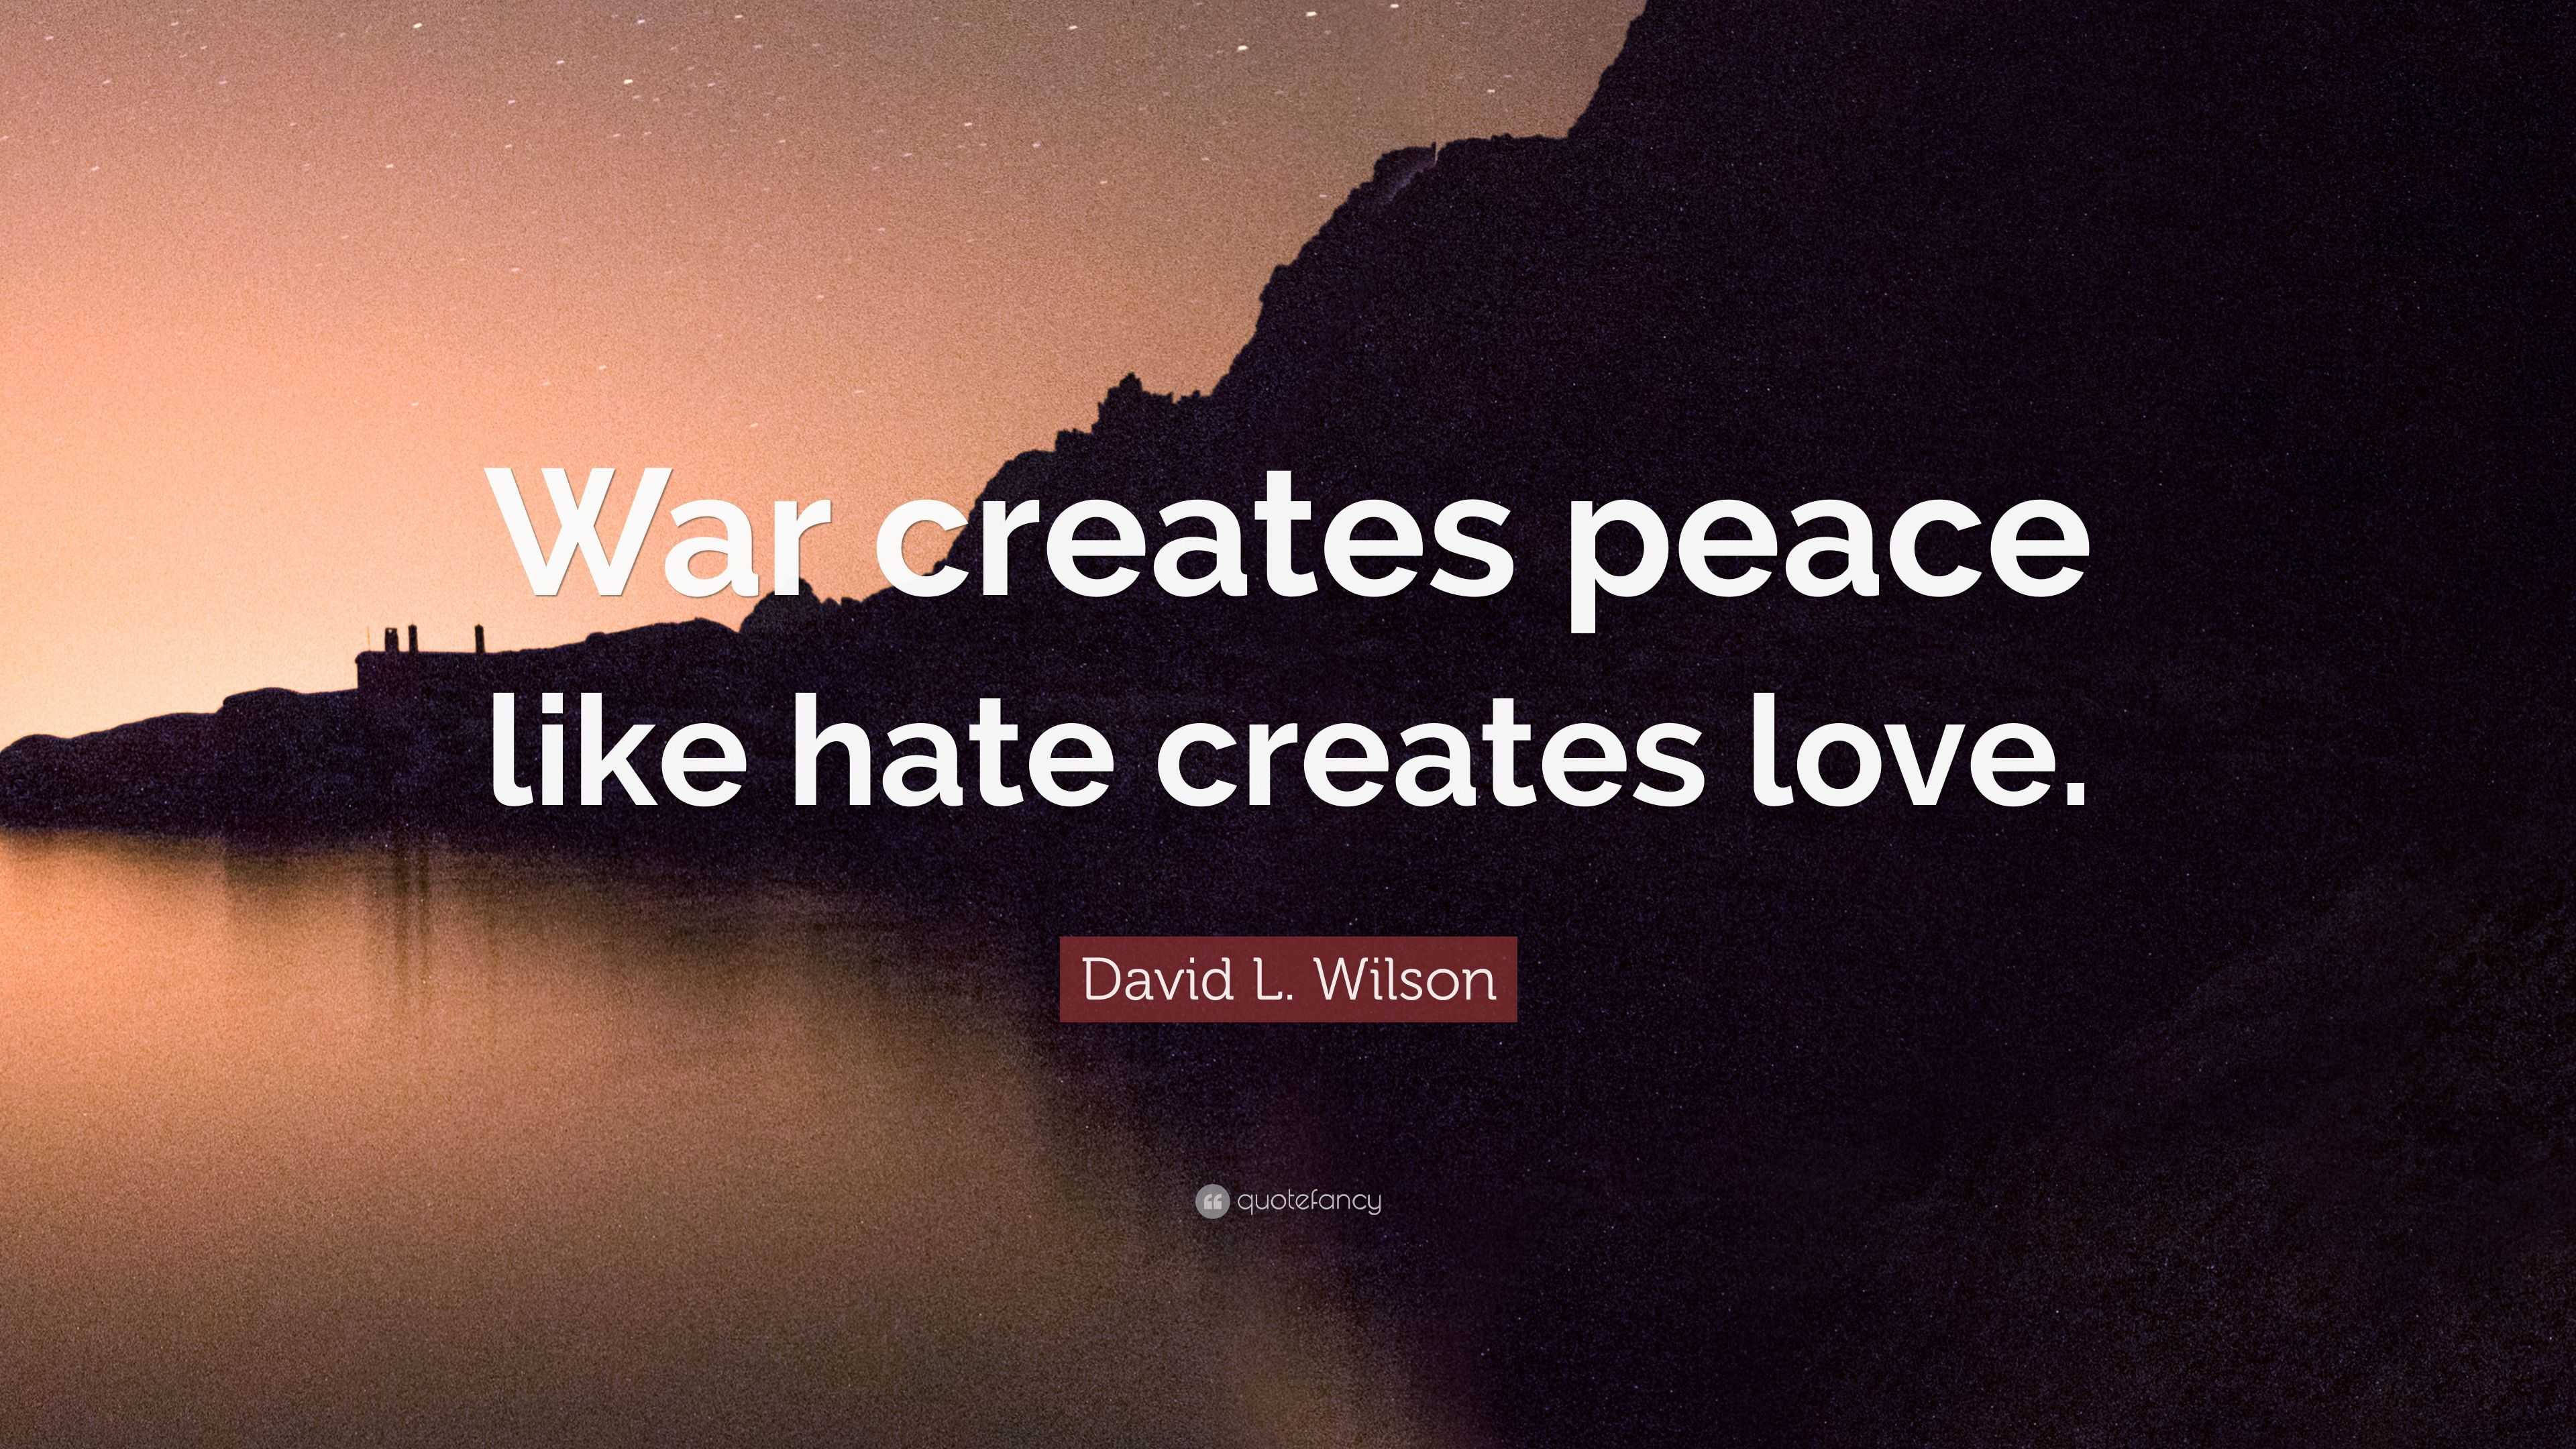 David L Wilson Quote “War creates peace like hate creates love ”